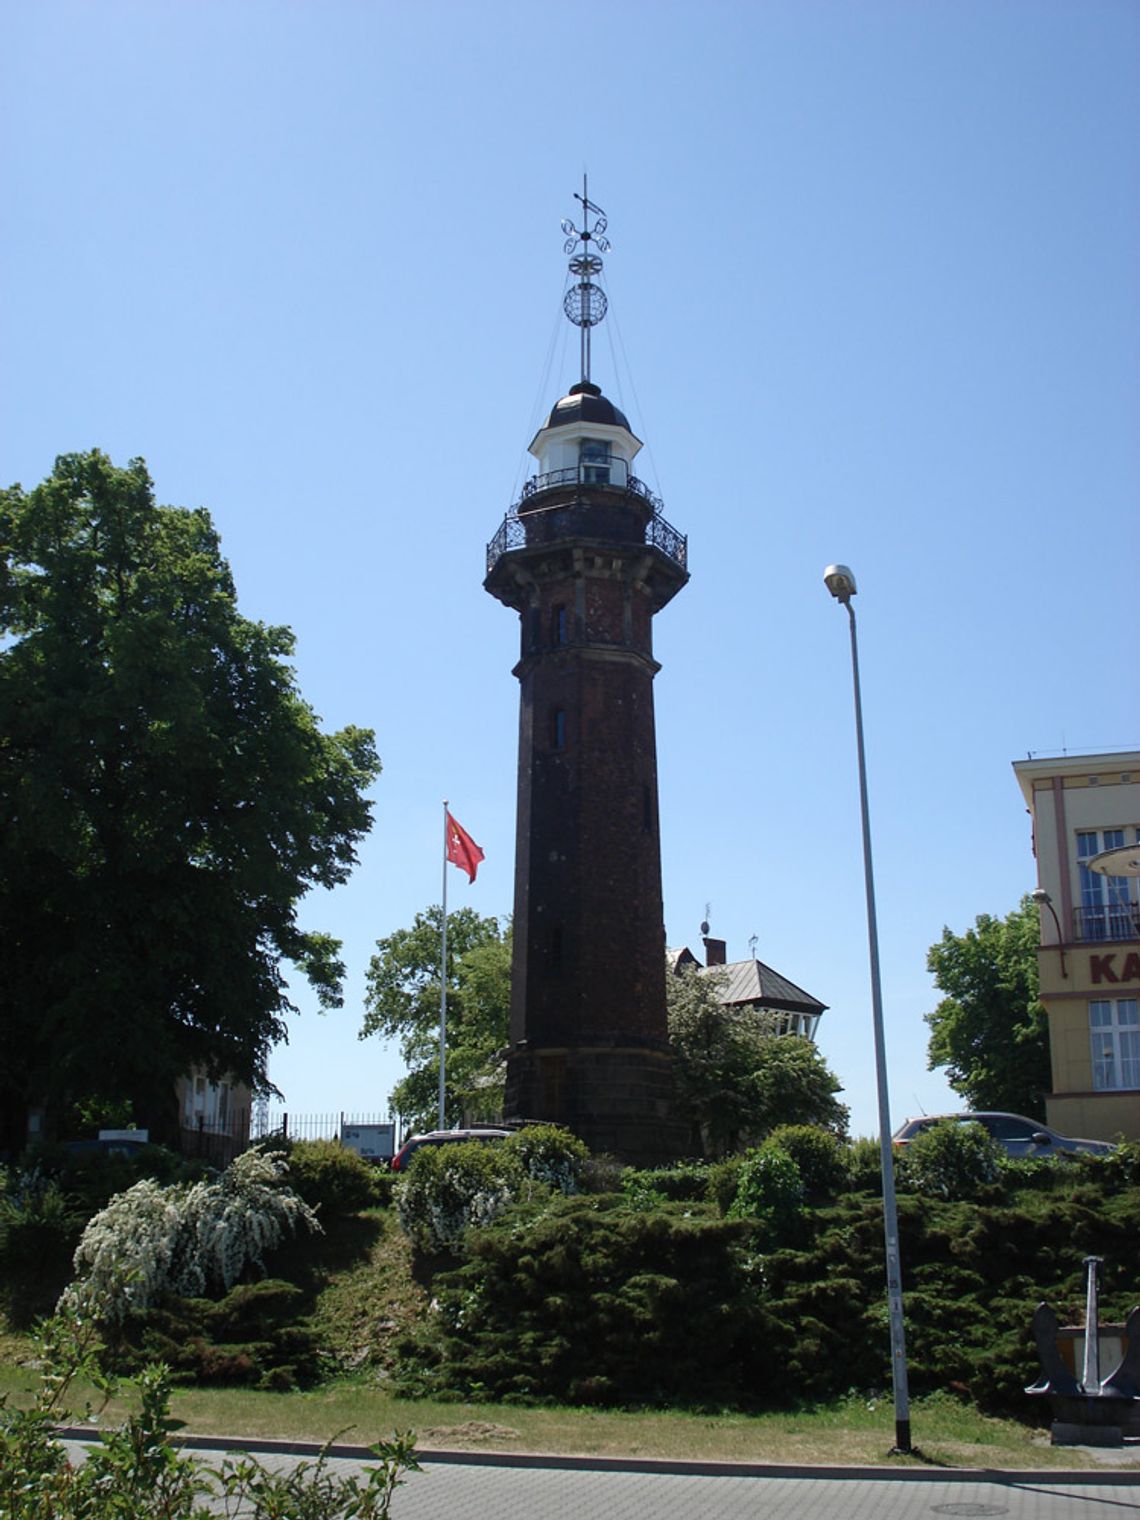 Latarnia Morska Gdańsk Nowy Port